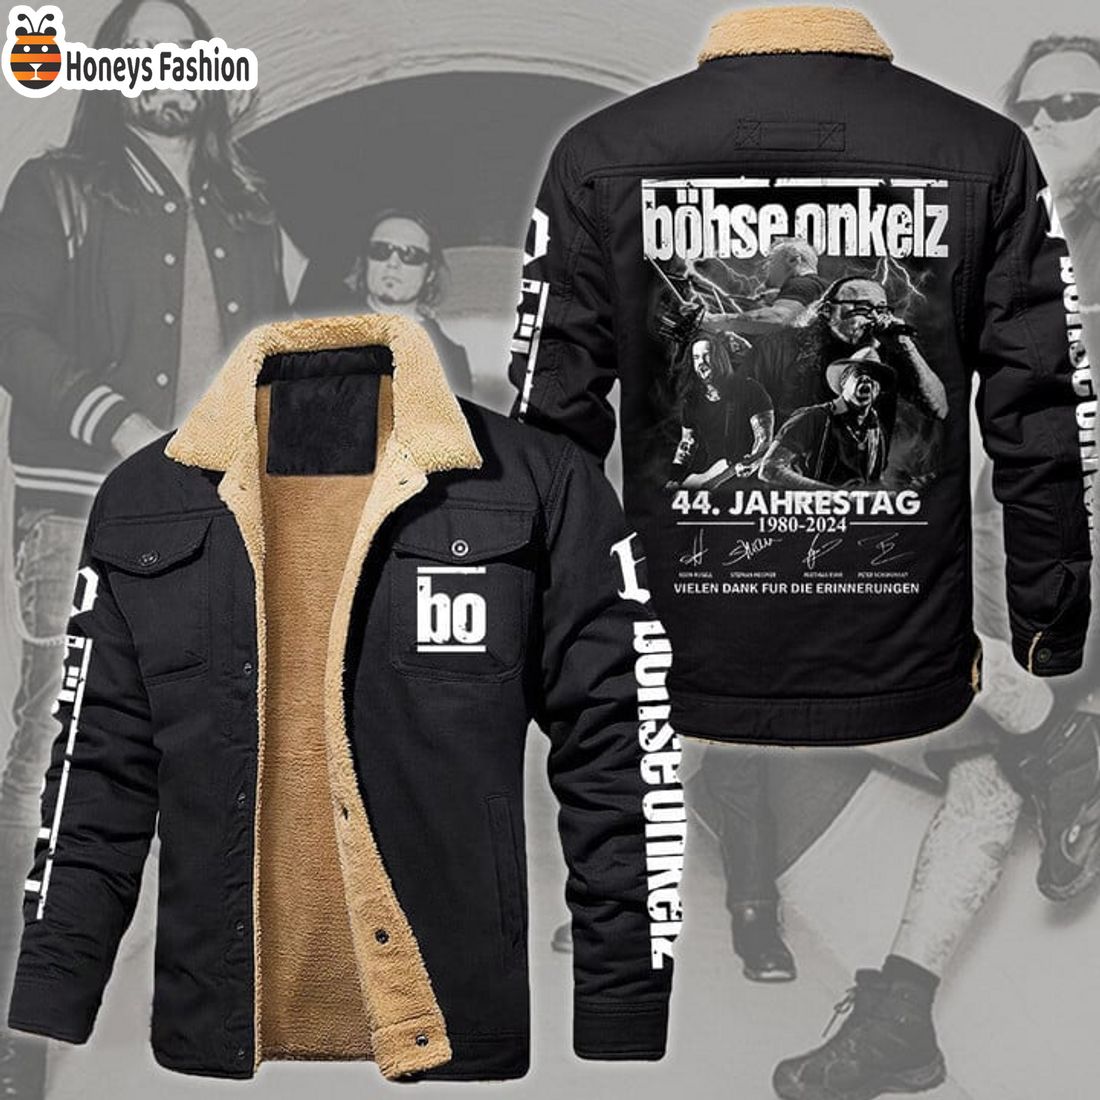 HOT Bohse Onkelz 44 Jahrestag 1980 2024 Fleece Leather Jacket